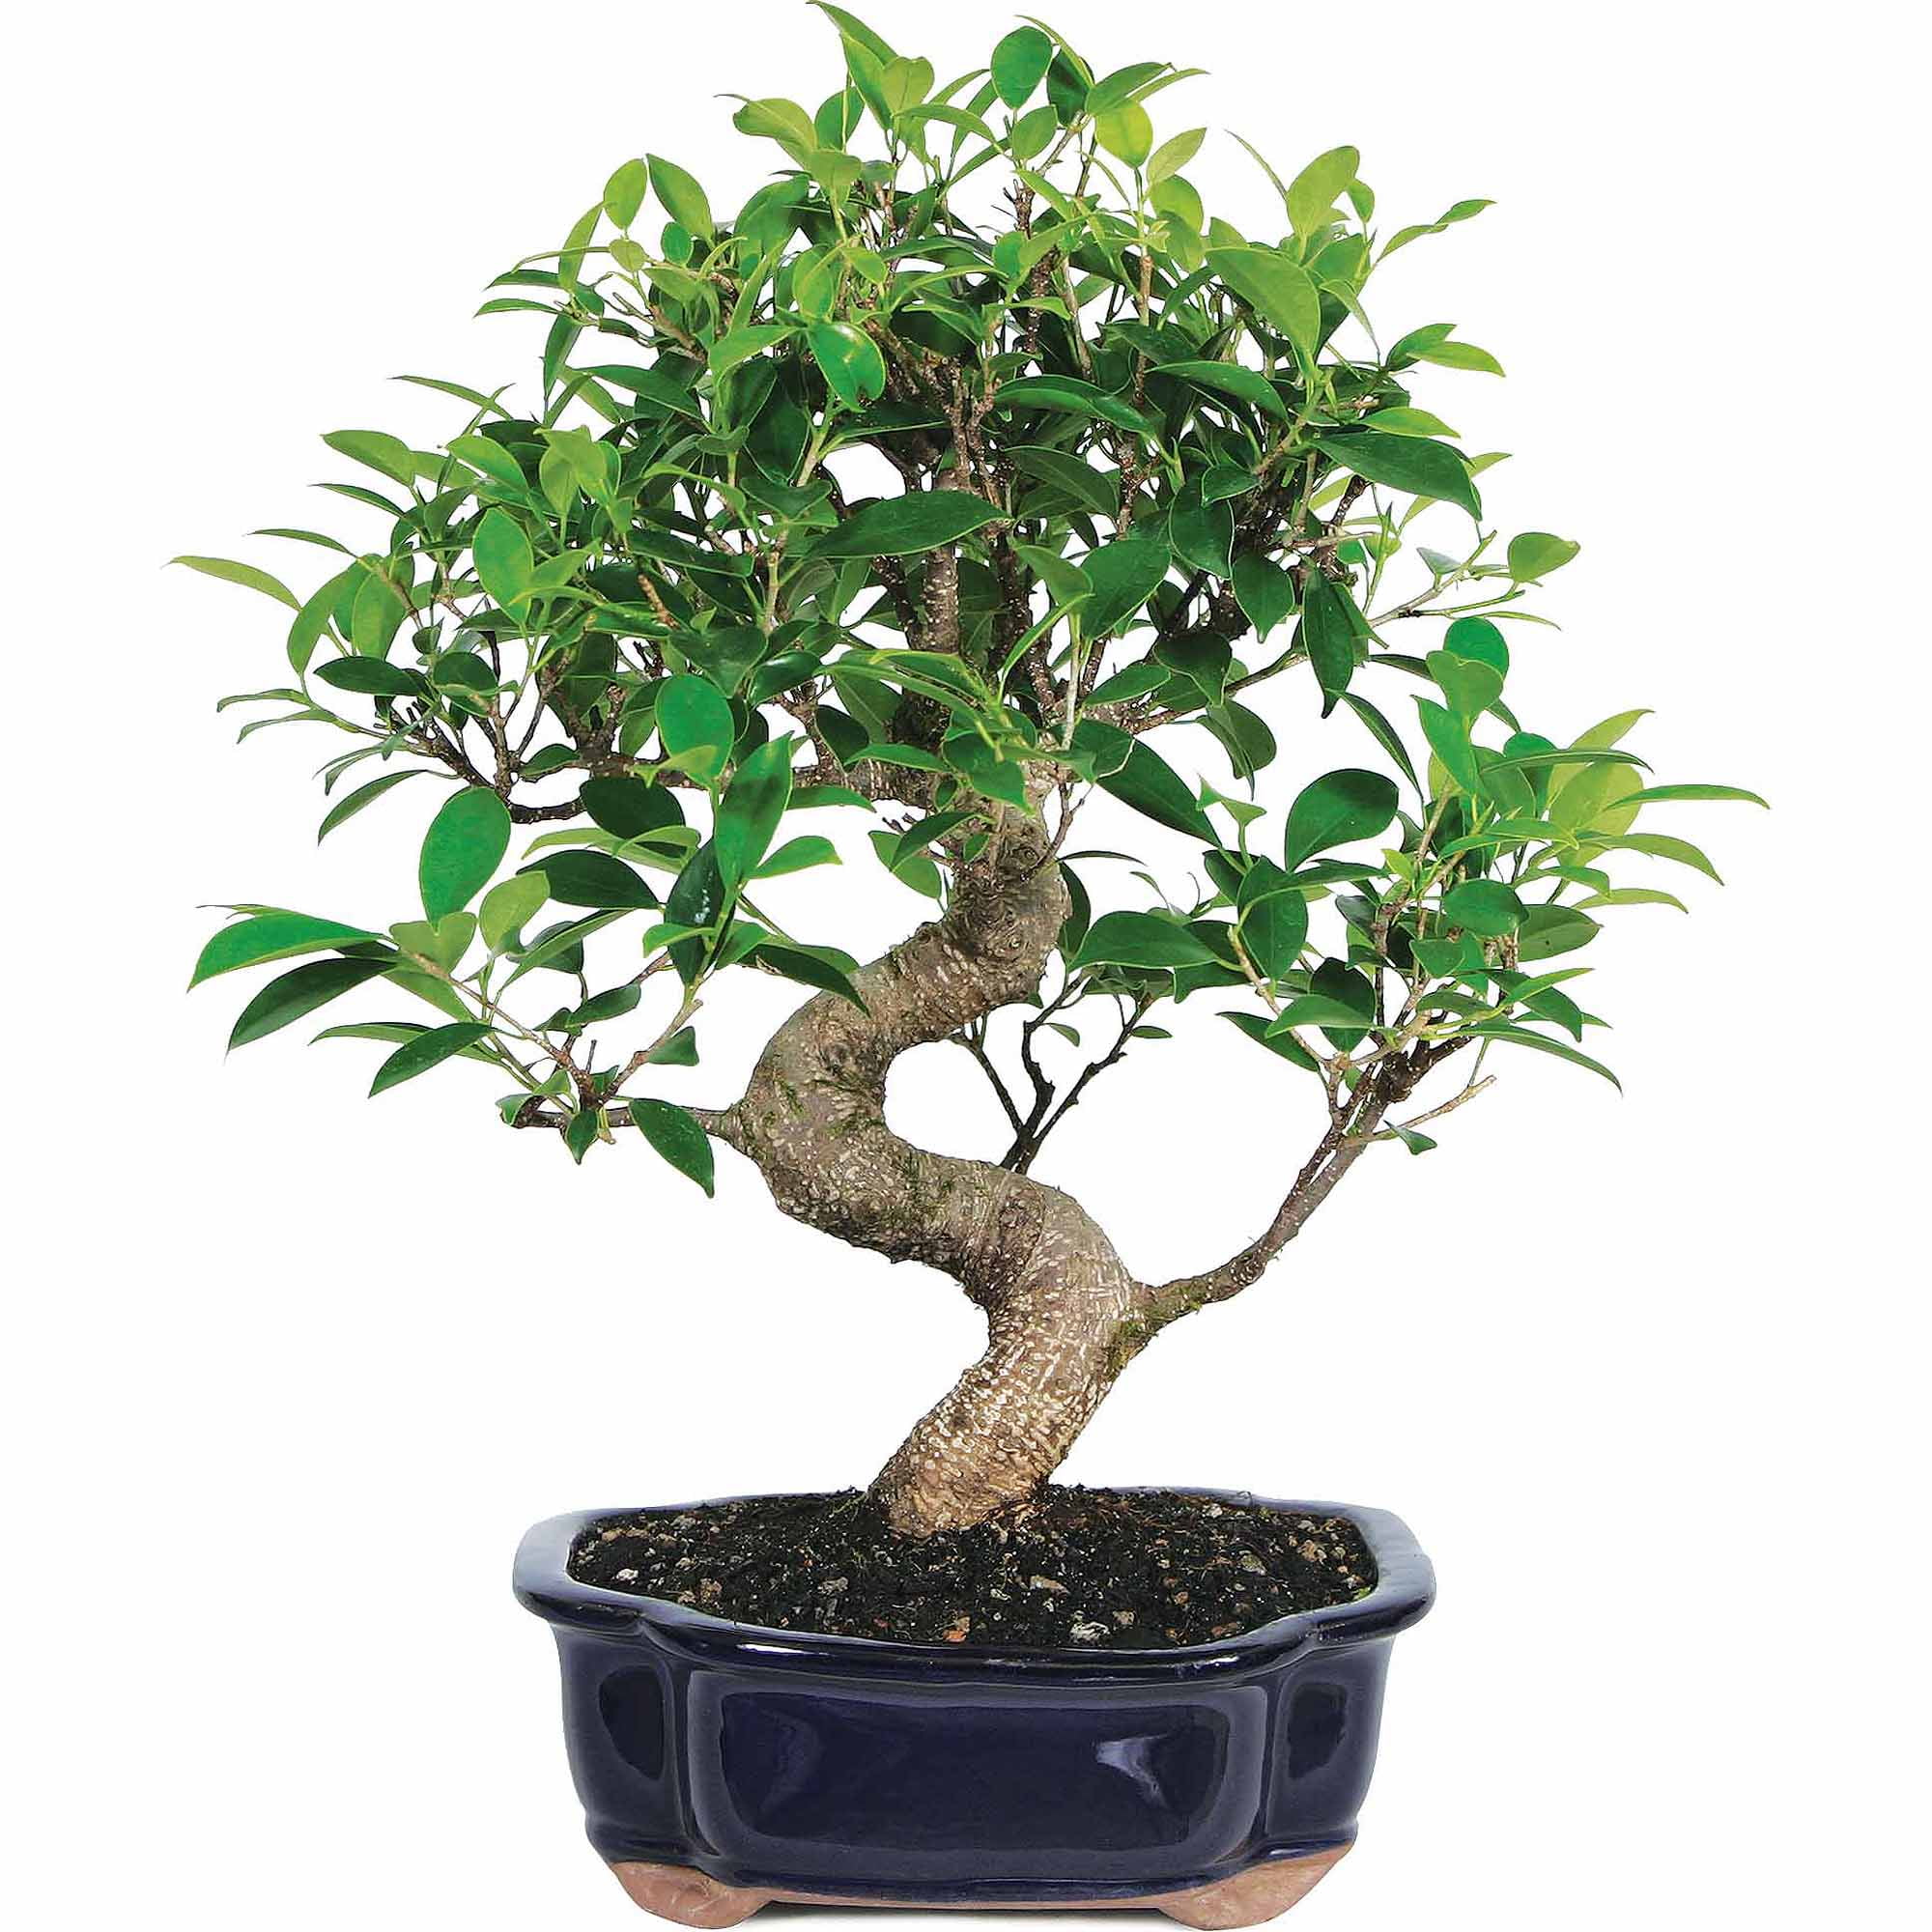 Brussel's Bonsai Ficus Bonsai Live Tree $24 + Free S&H w/ Walmart+ or $35+